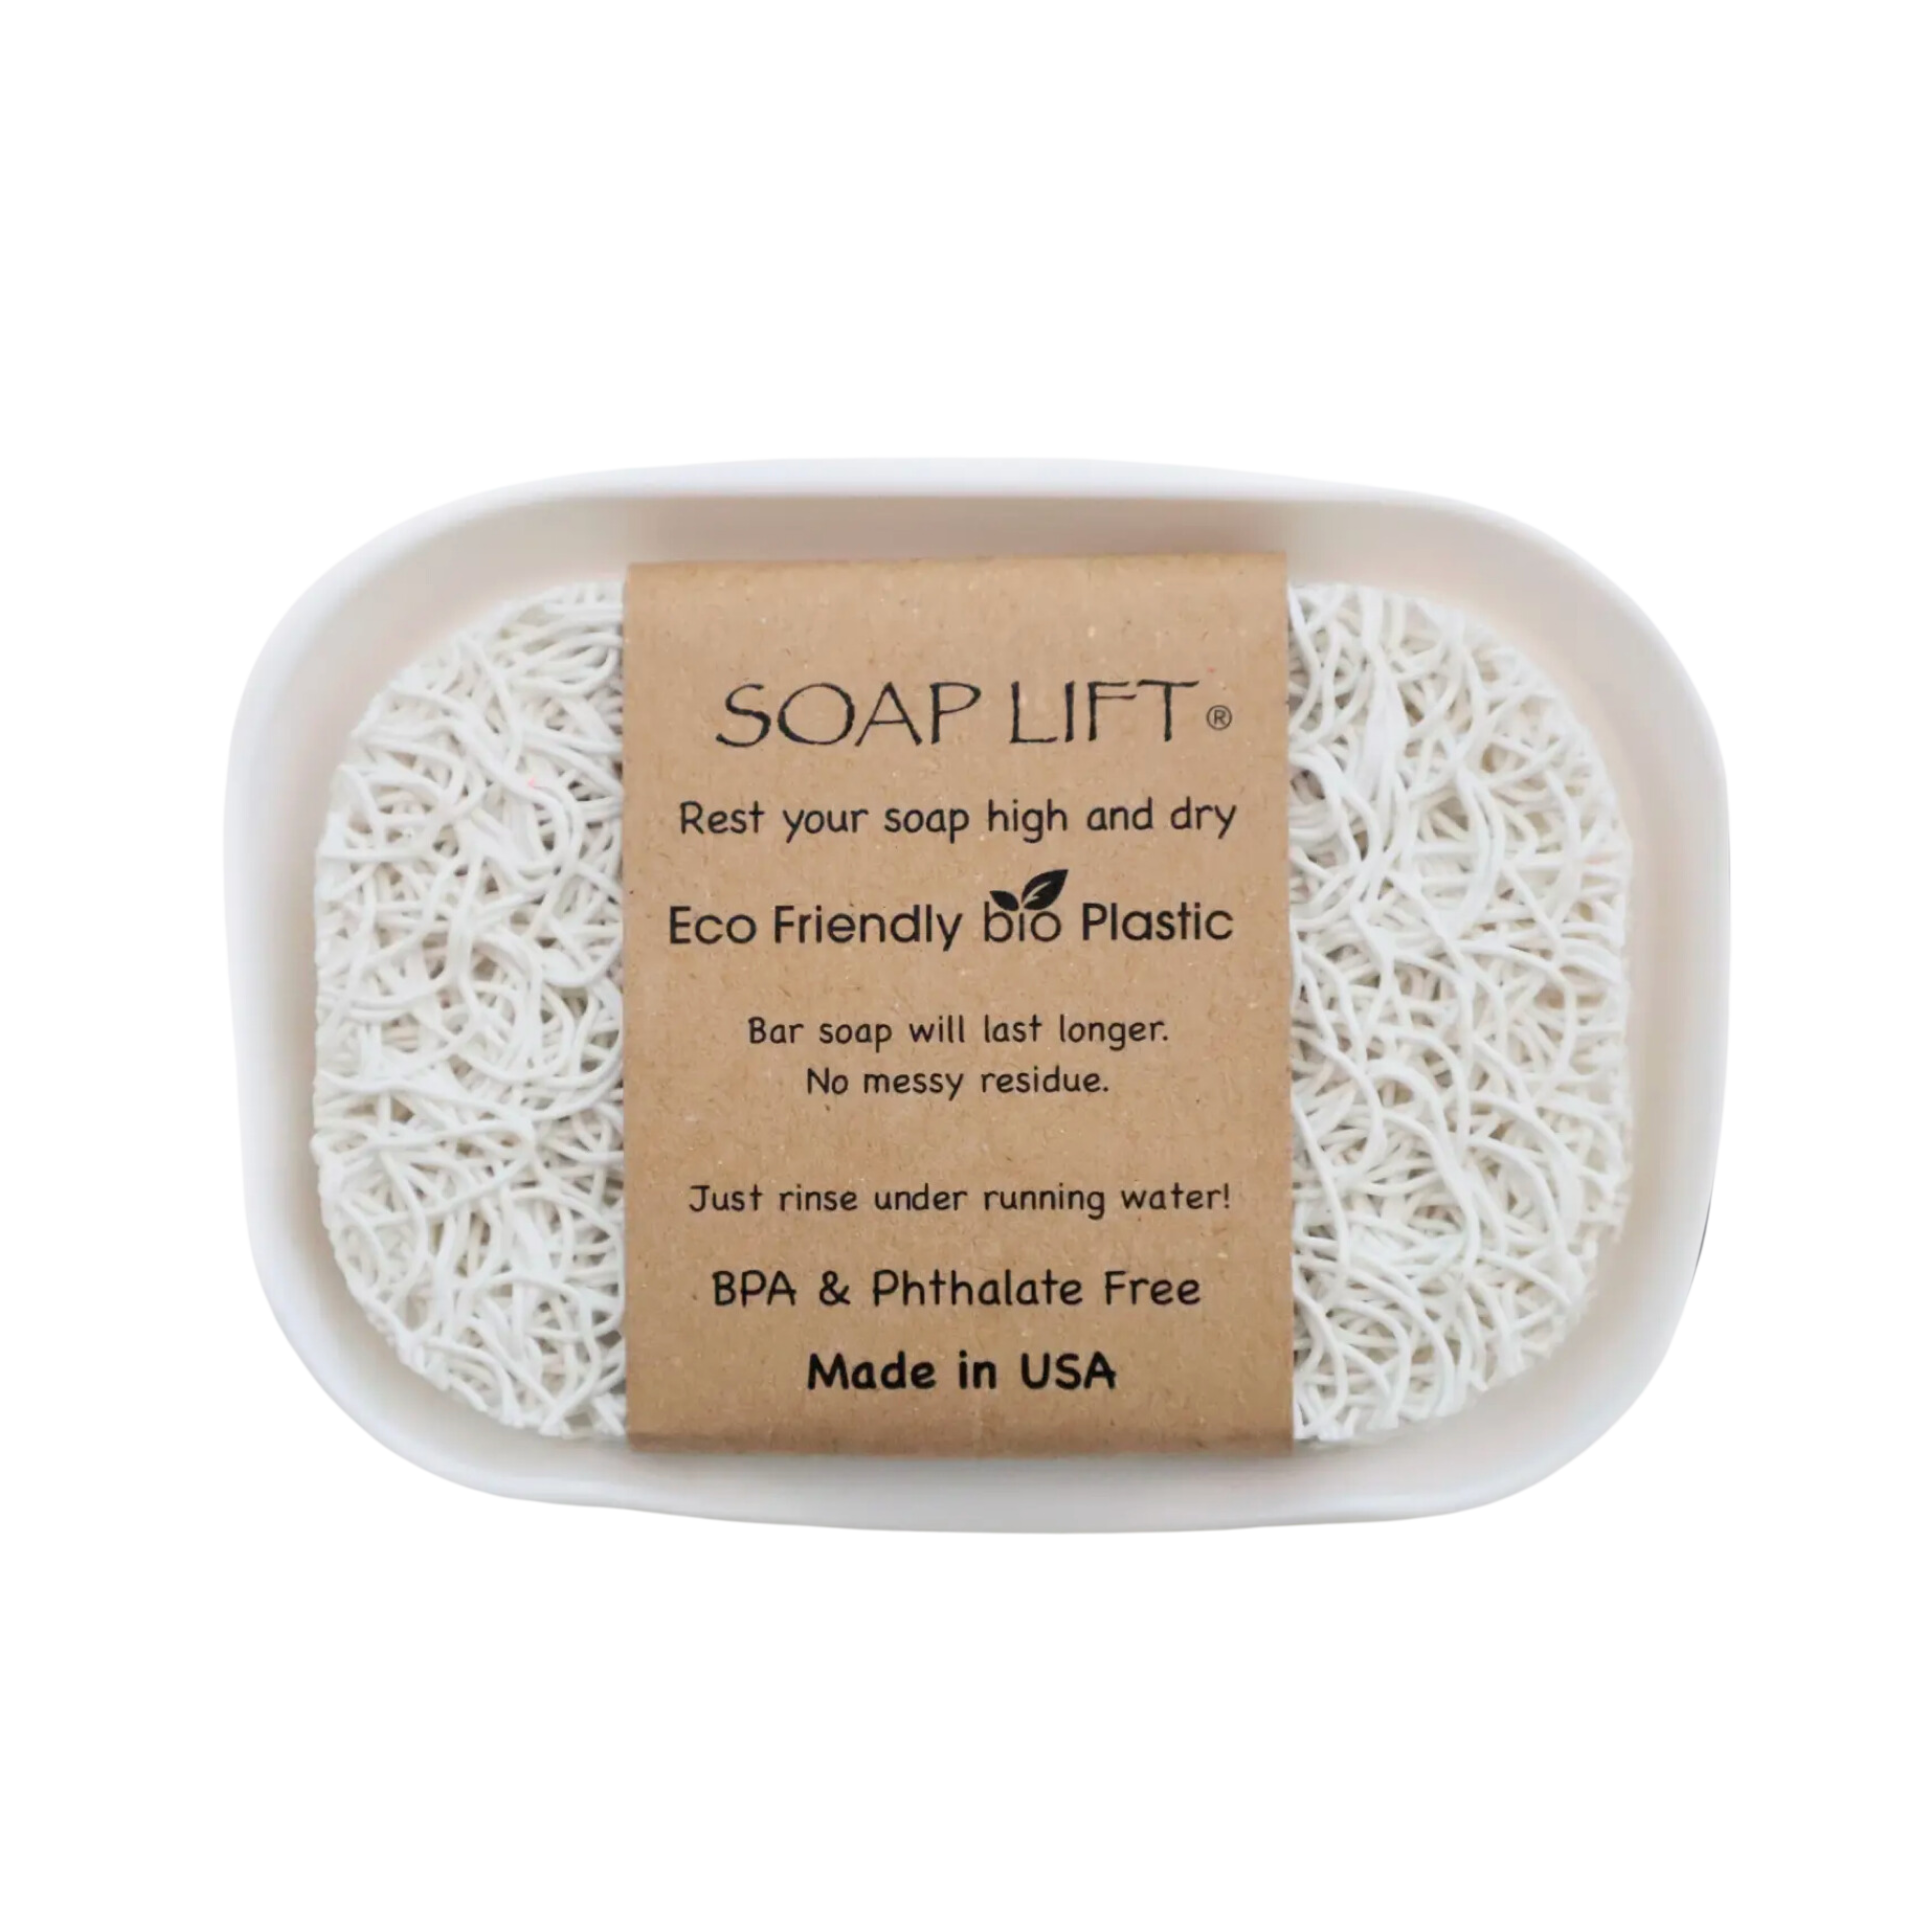 SOAP LIFT eco-friendly bio-plastic dish